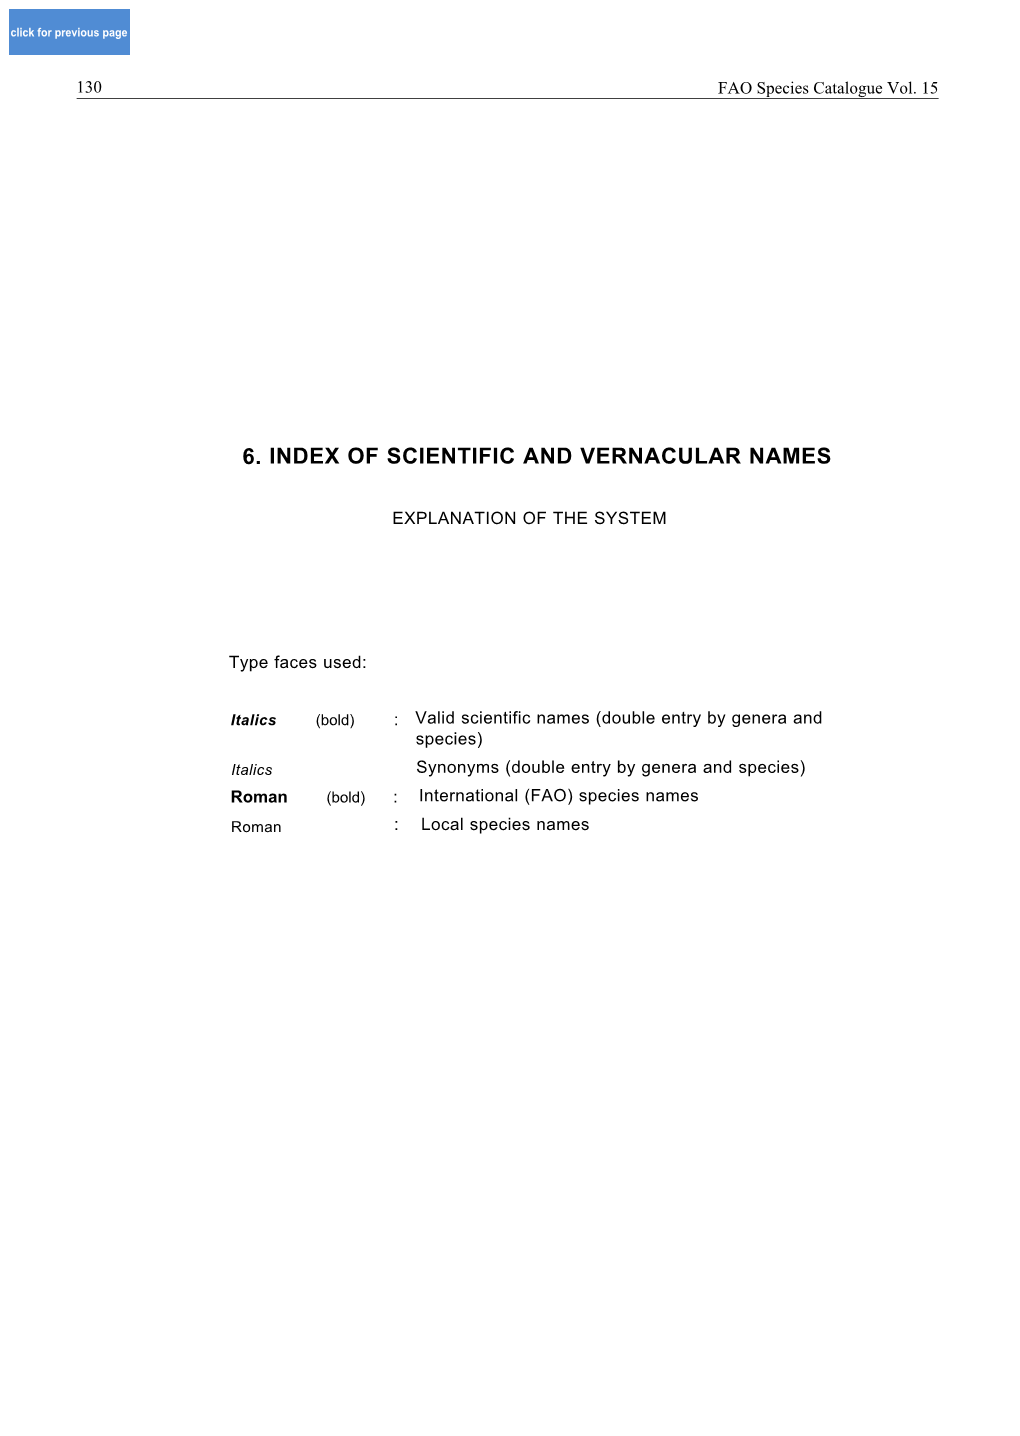 6. Index of Scientific and Vernacular Names